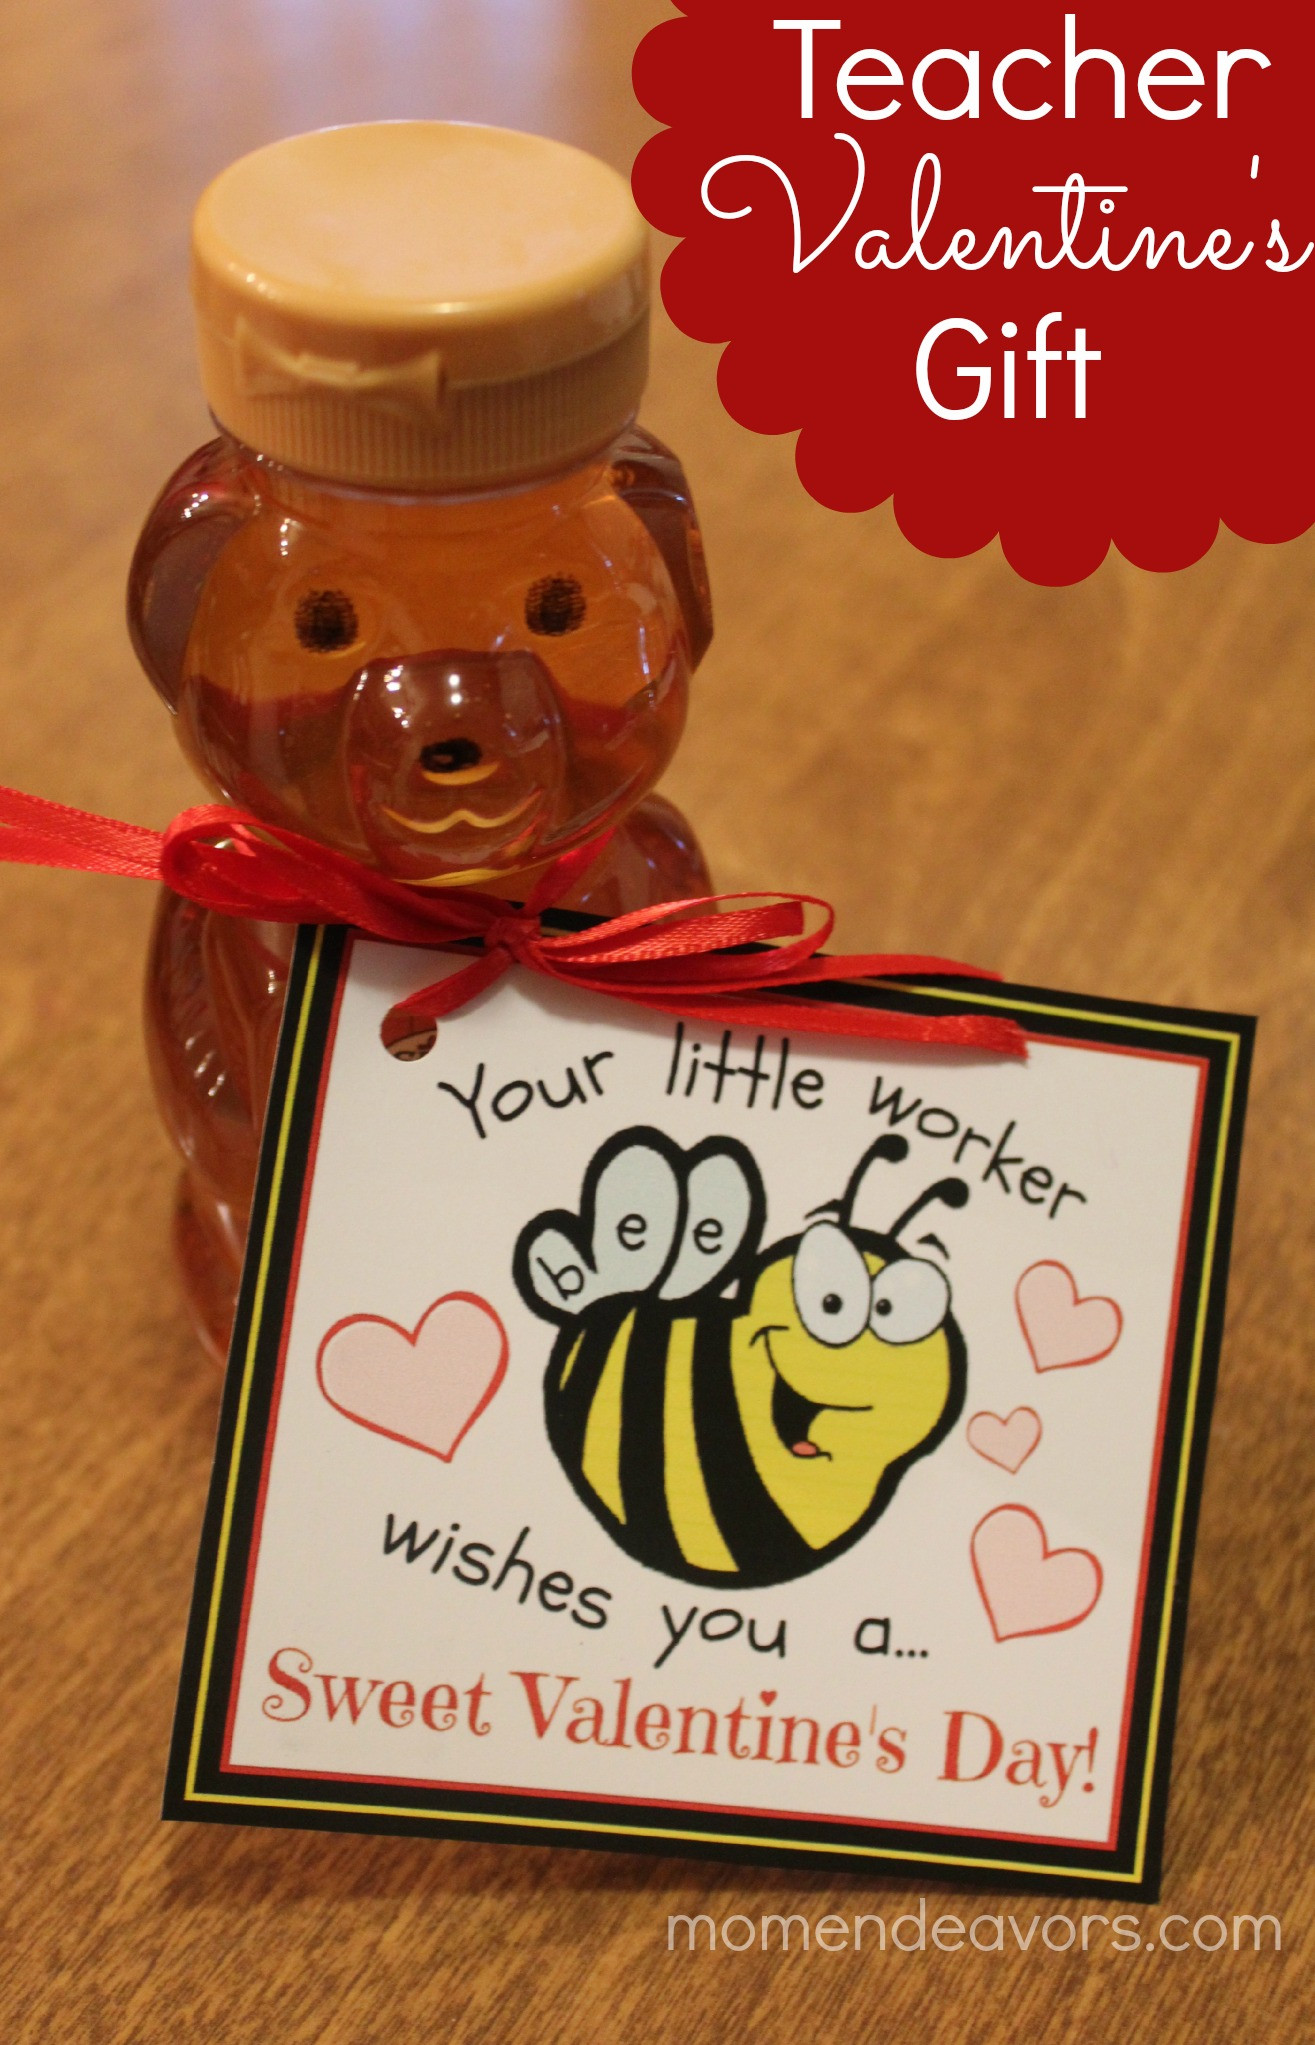 Valentine Gift Ideas For Male Teachers
 Bee themed Teacher Valentine’s Gift